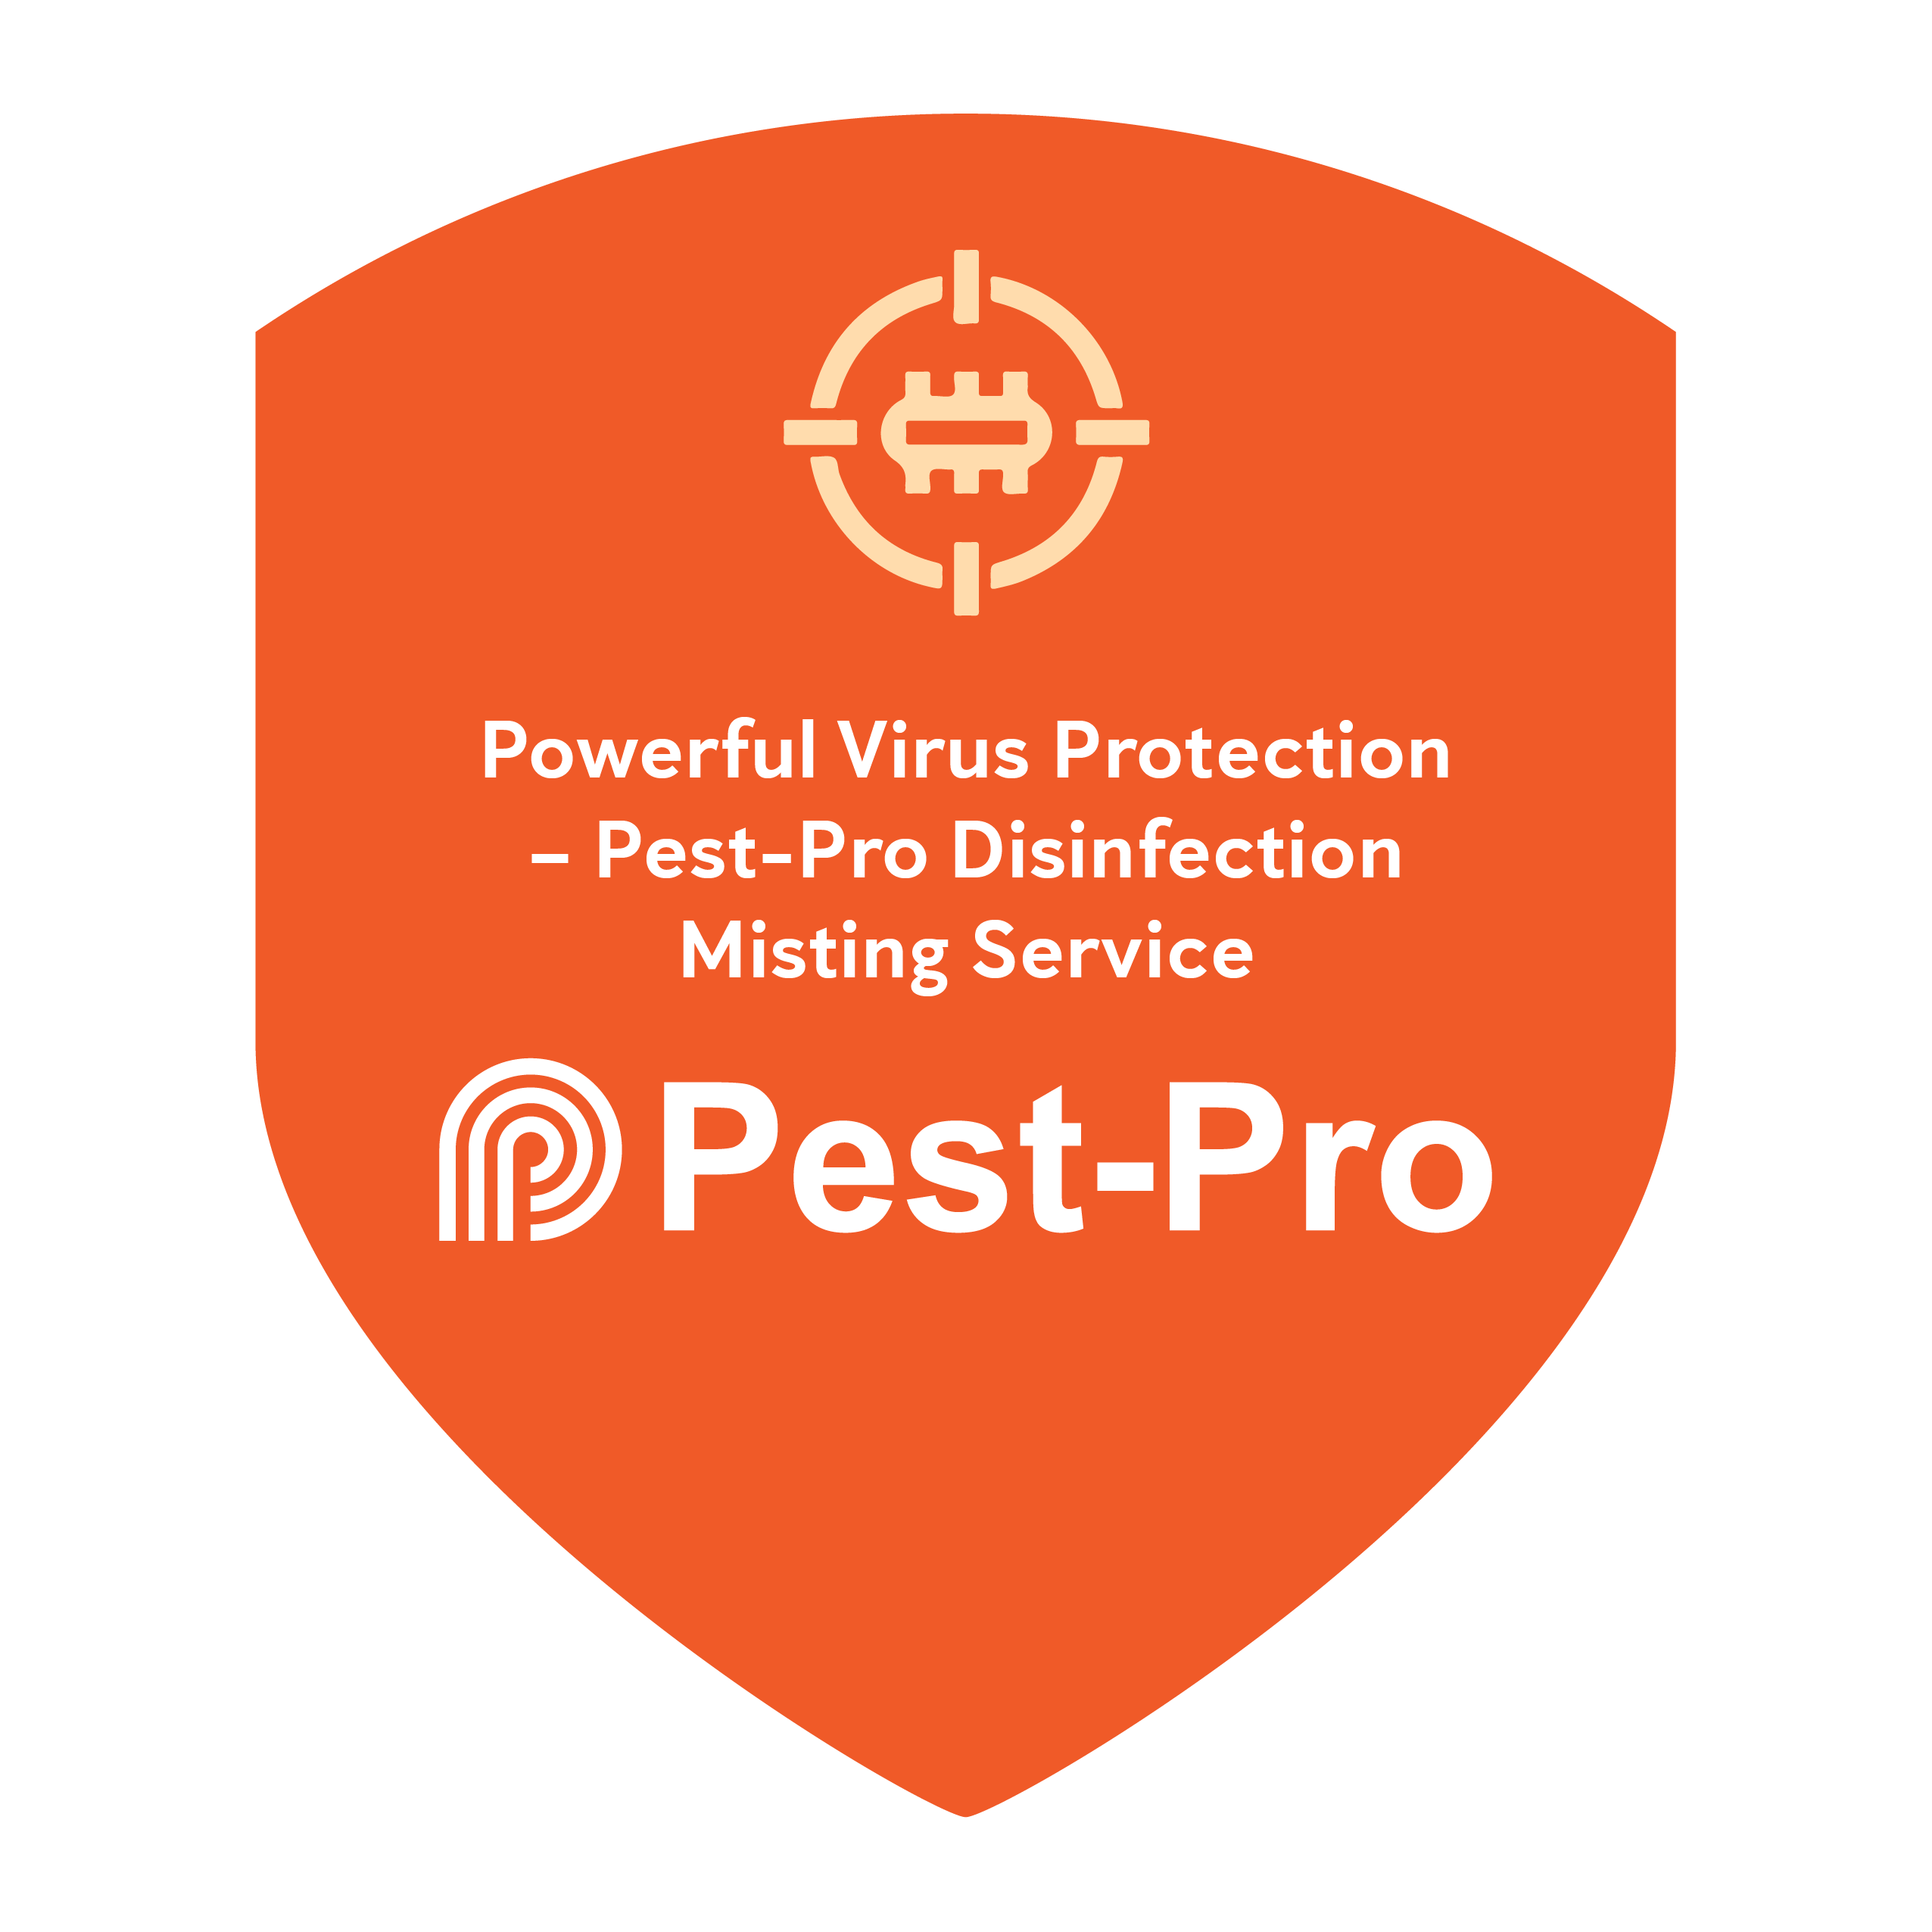 Pest-Pro Disinfection Misting Service